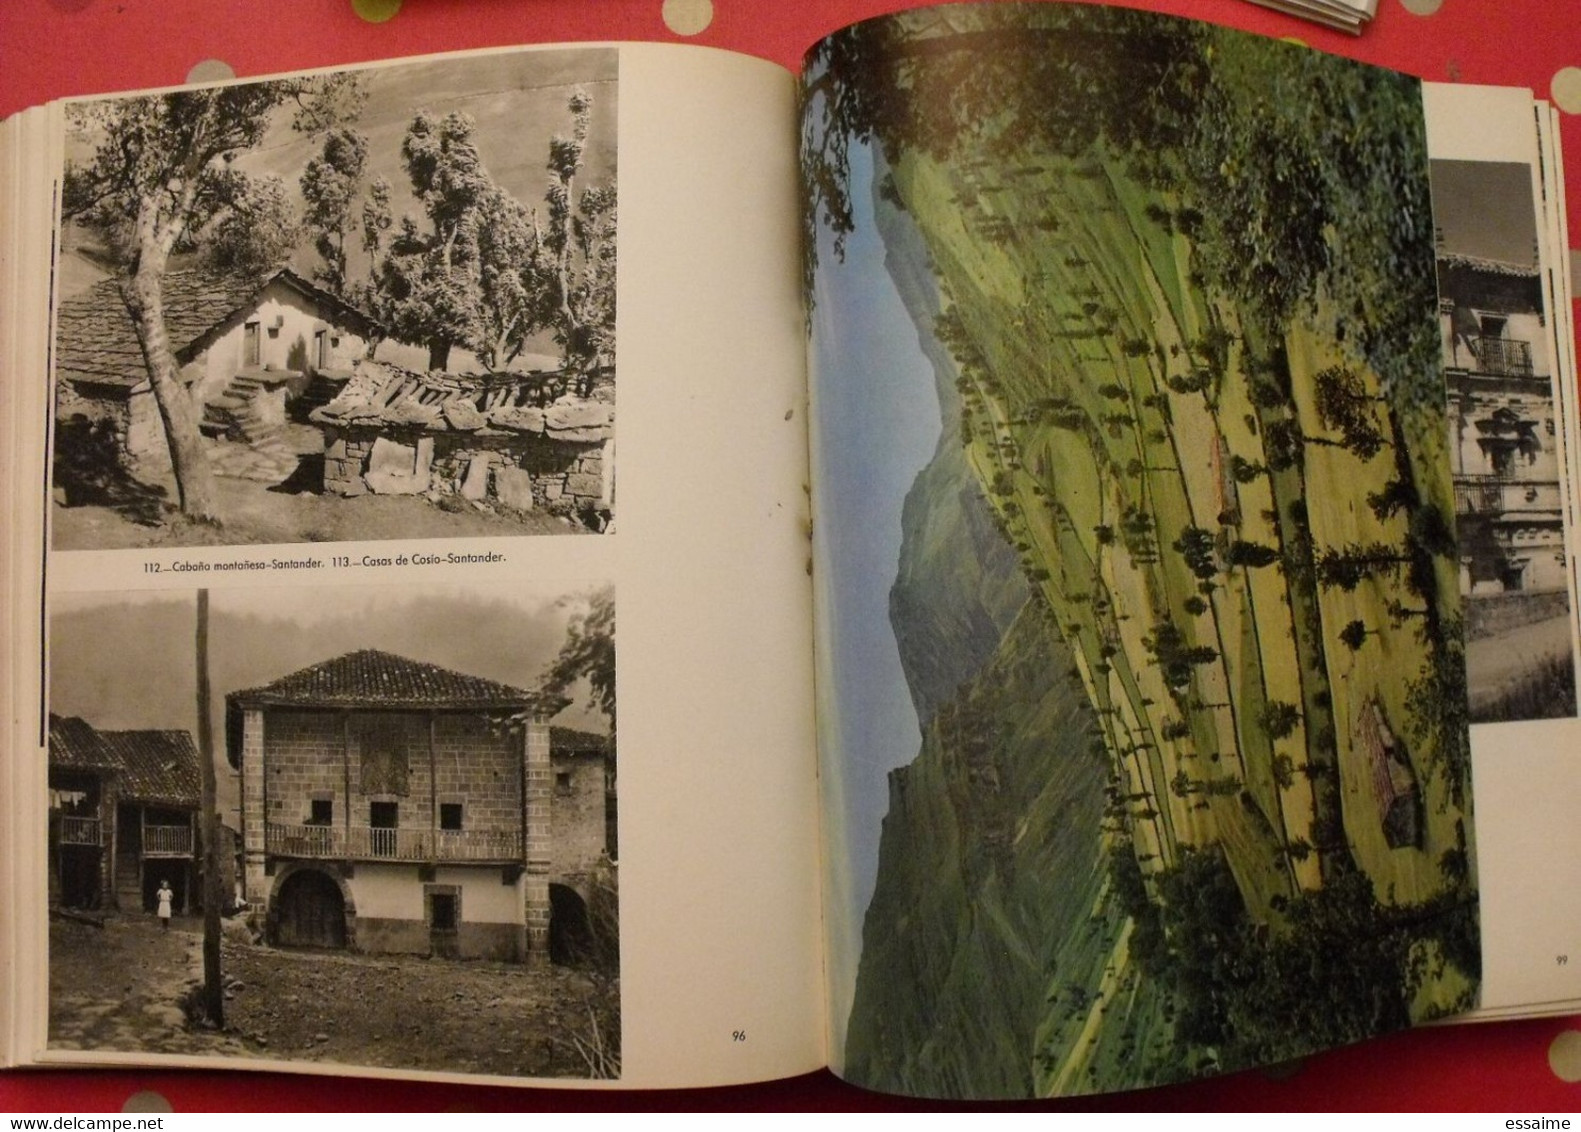 espana, pueblos y paisajes. josé ortiz achague, azorin. 1962. bien illustré